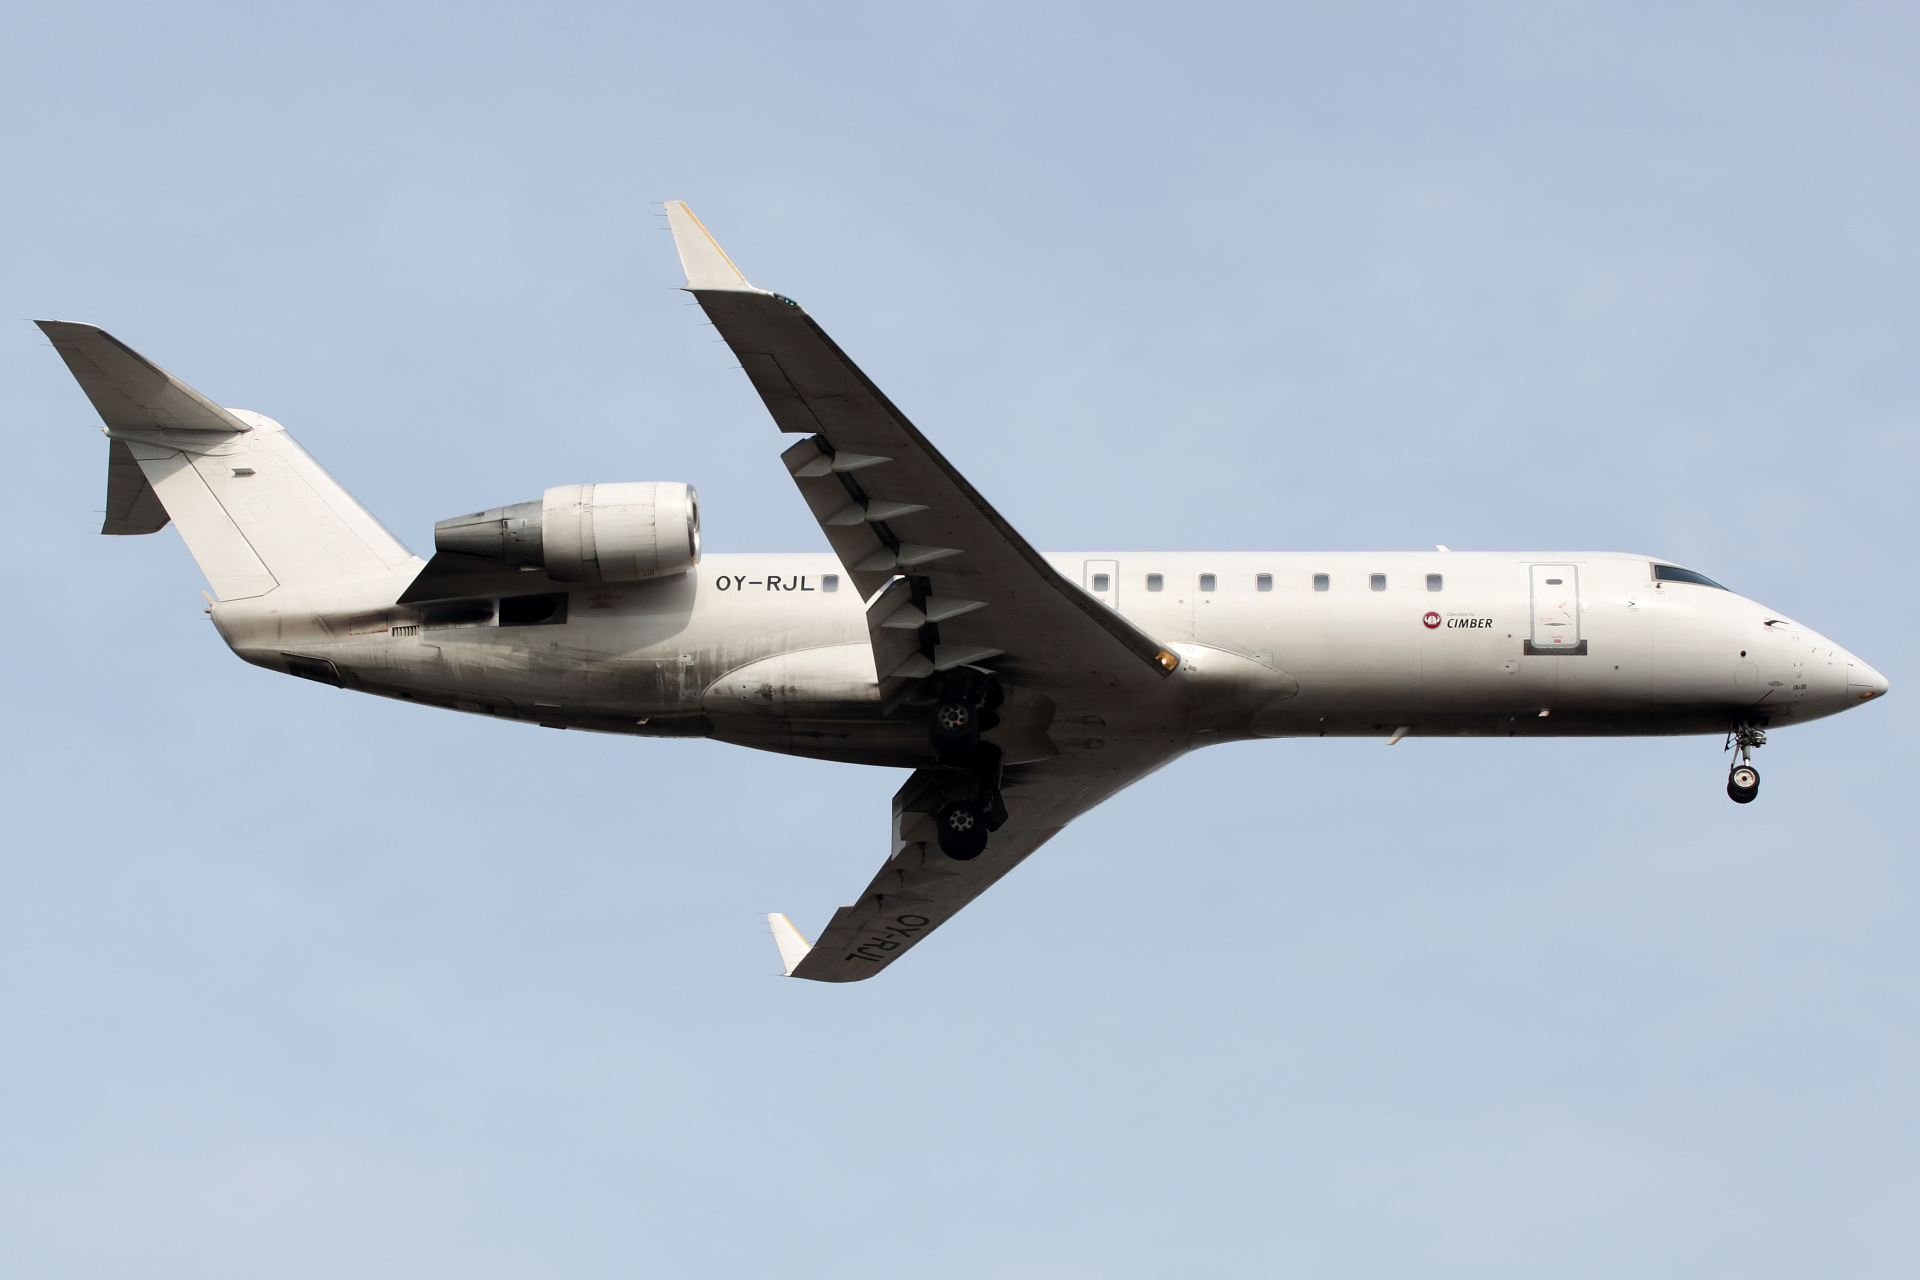 OY-RJL (Aircraft » EPWA Spotting » Bombardier CL-600 Regional Jet » CRJ-200 » Cimber Air)